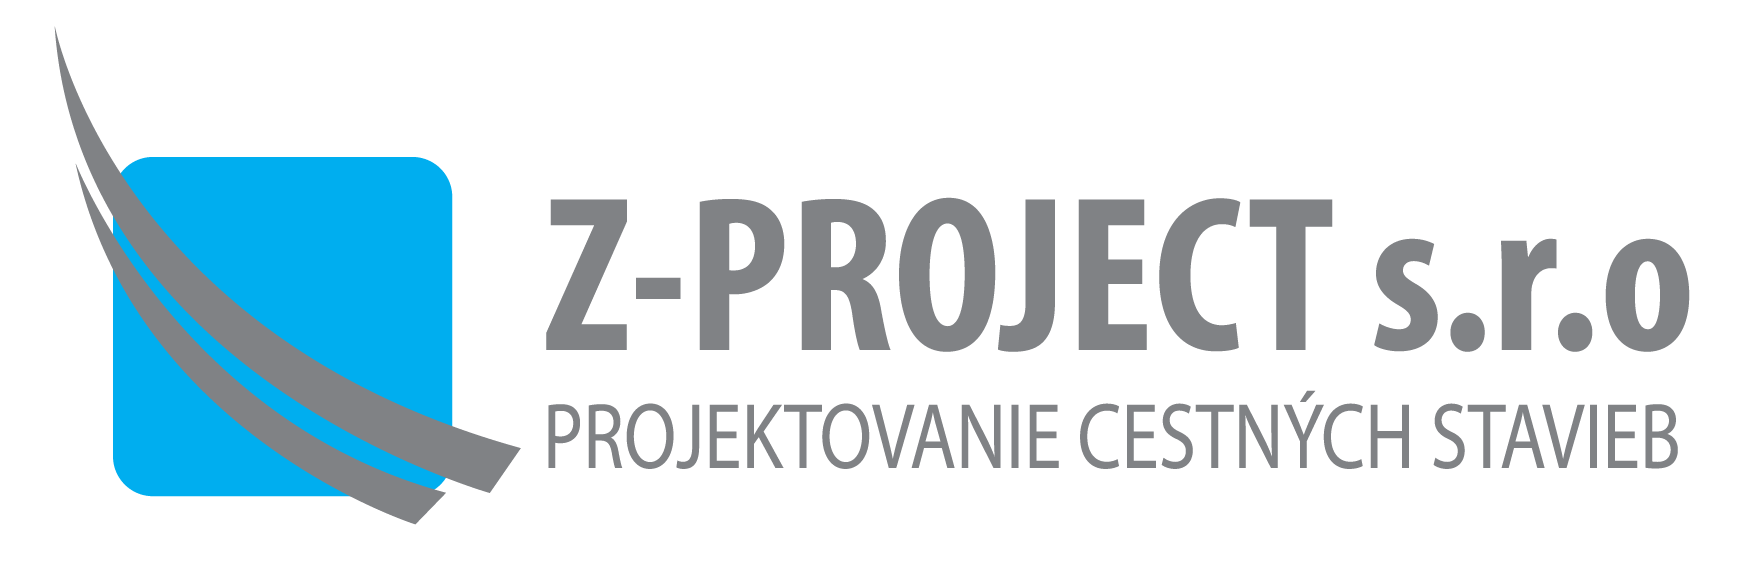 Z-Project logo